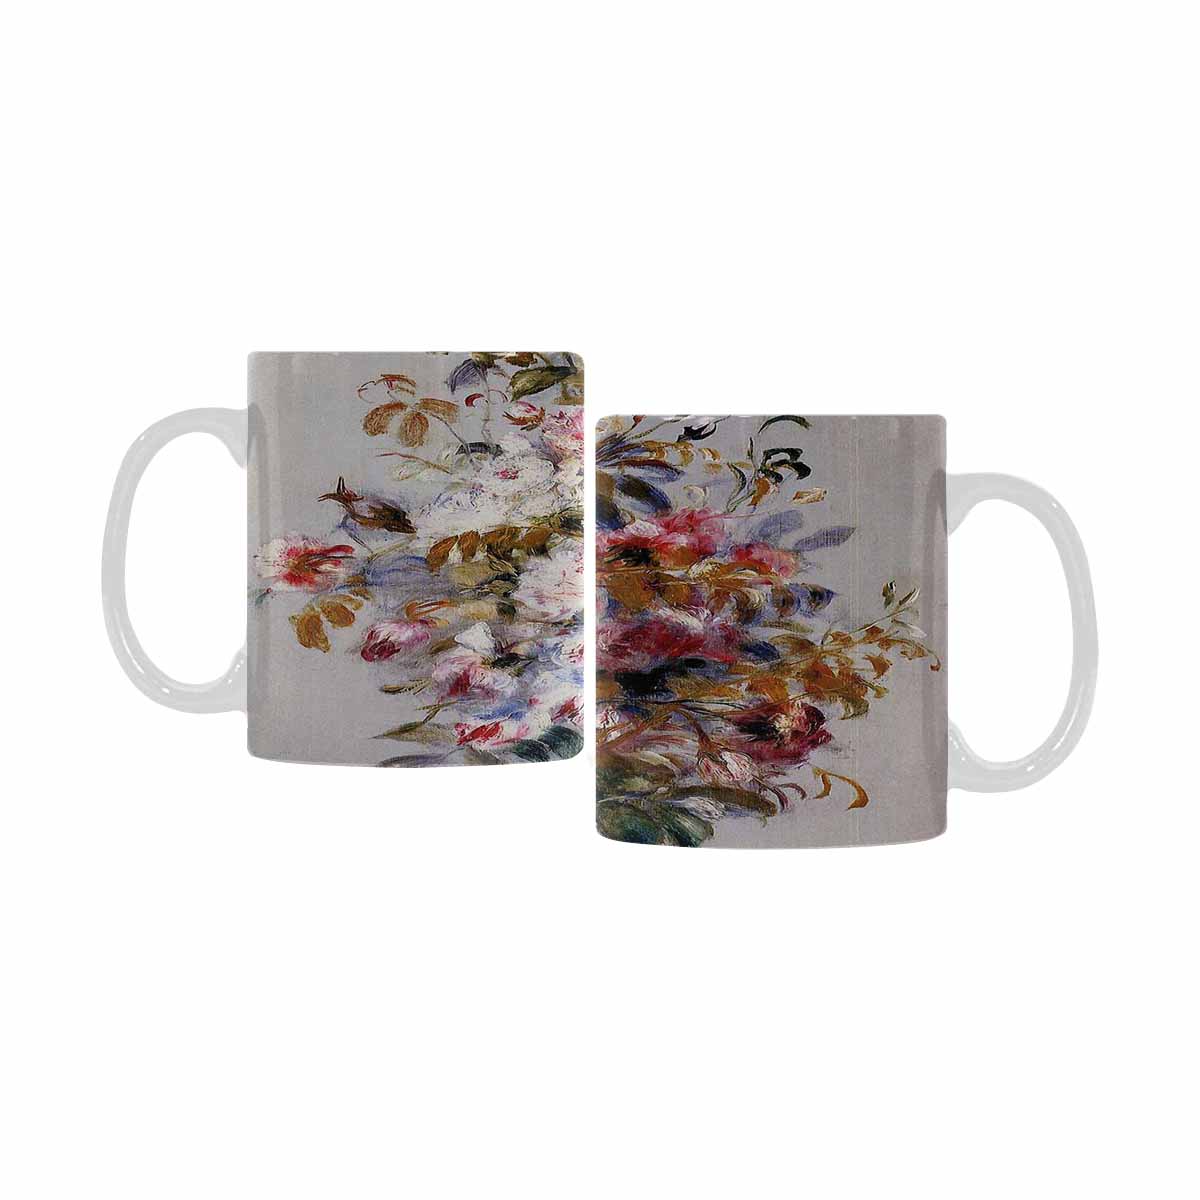 Vintage floral coffee mug or tea cup, Design 12